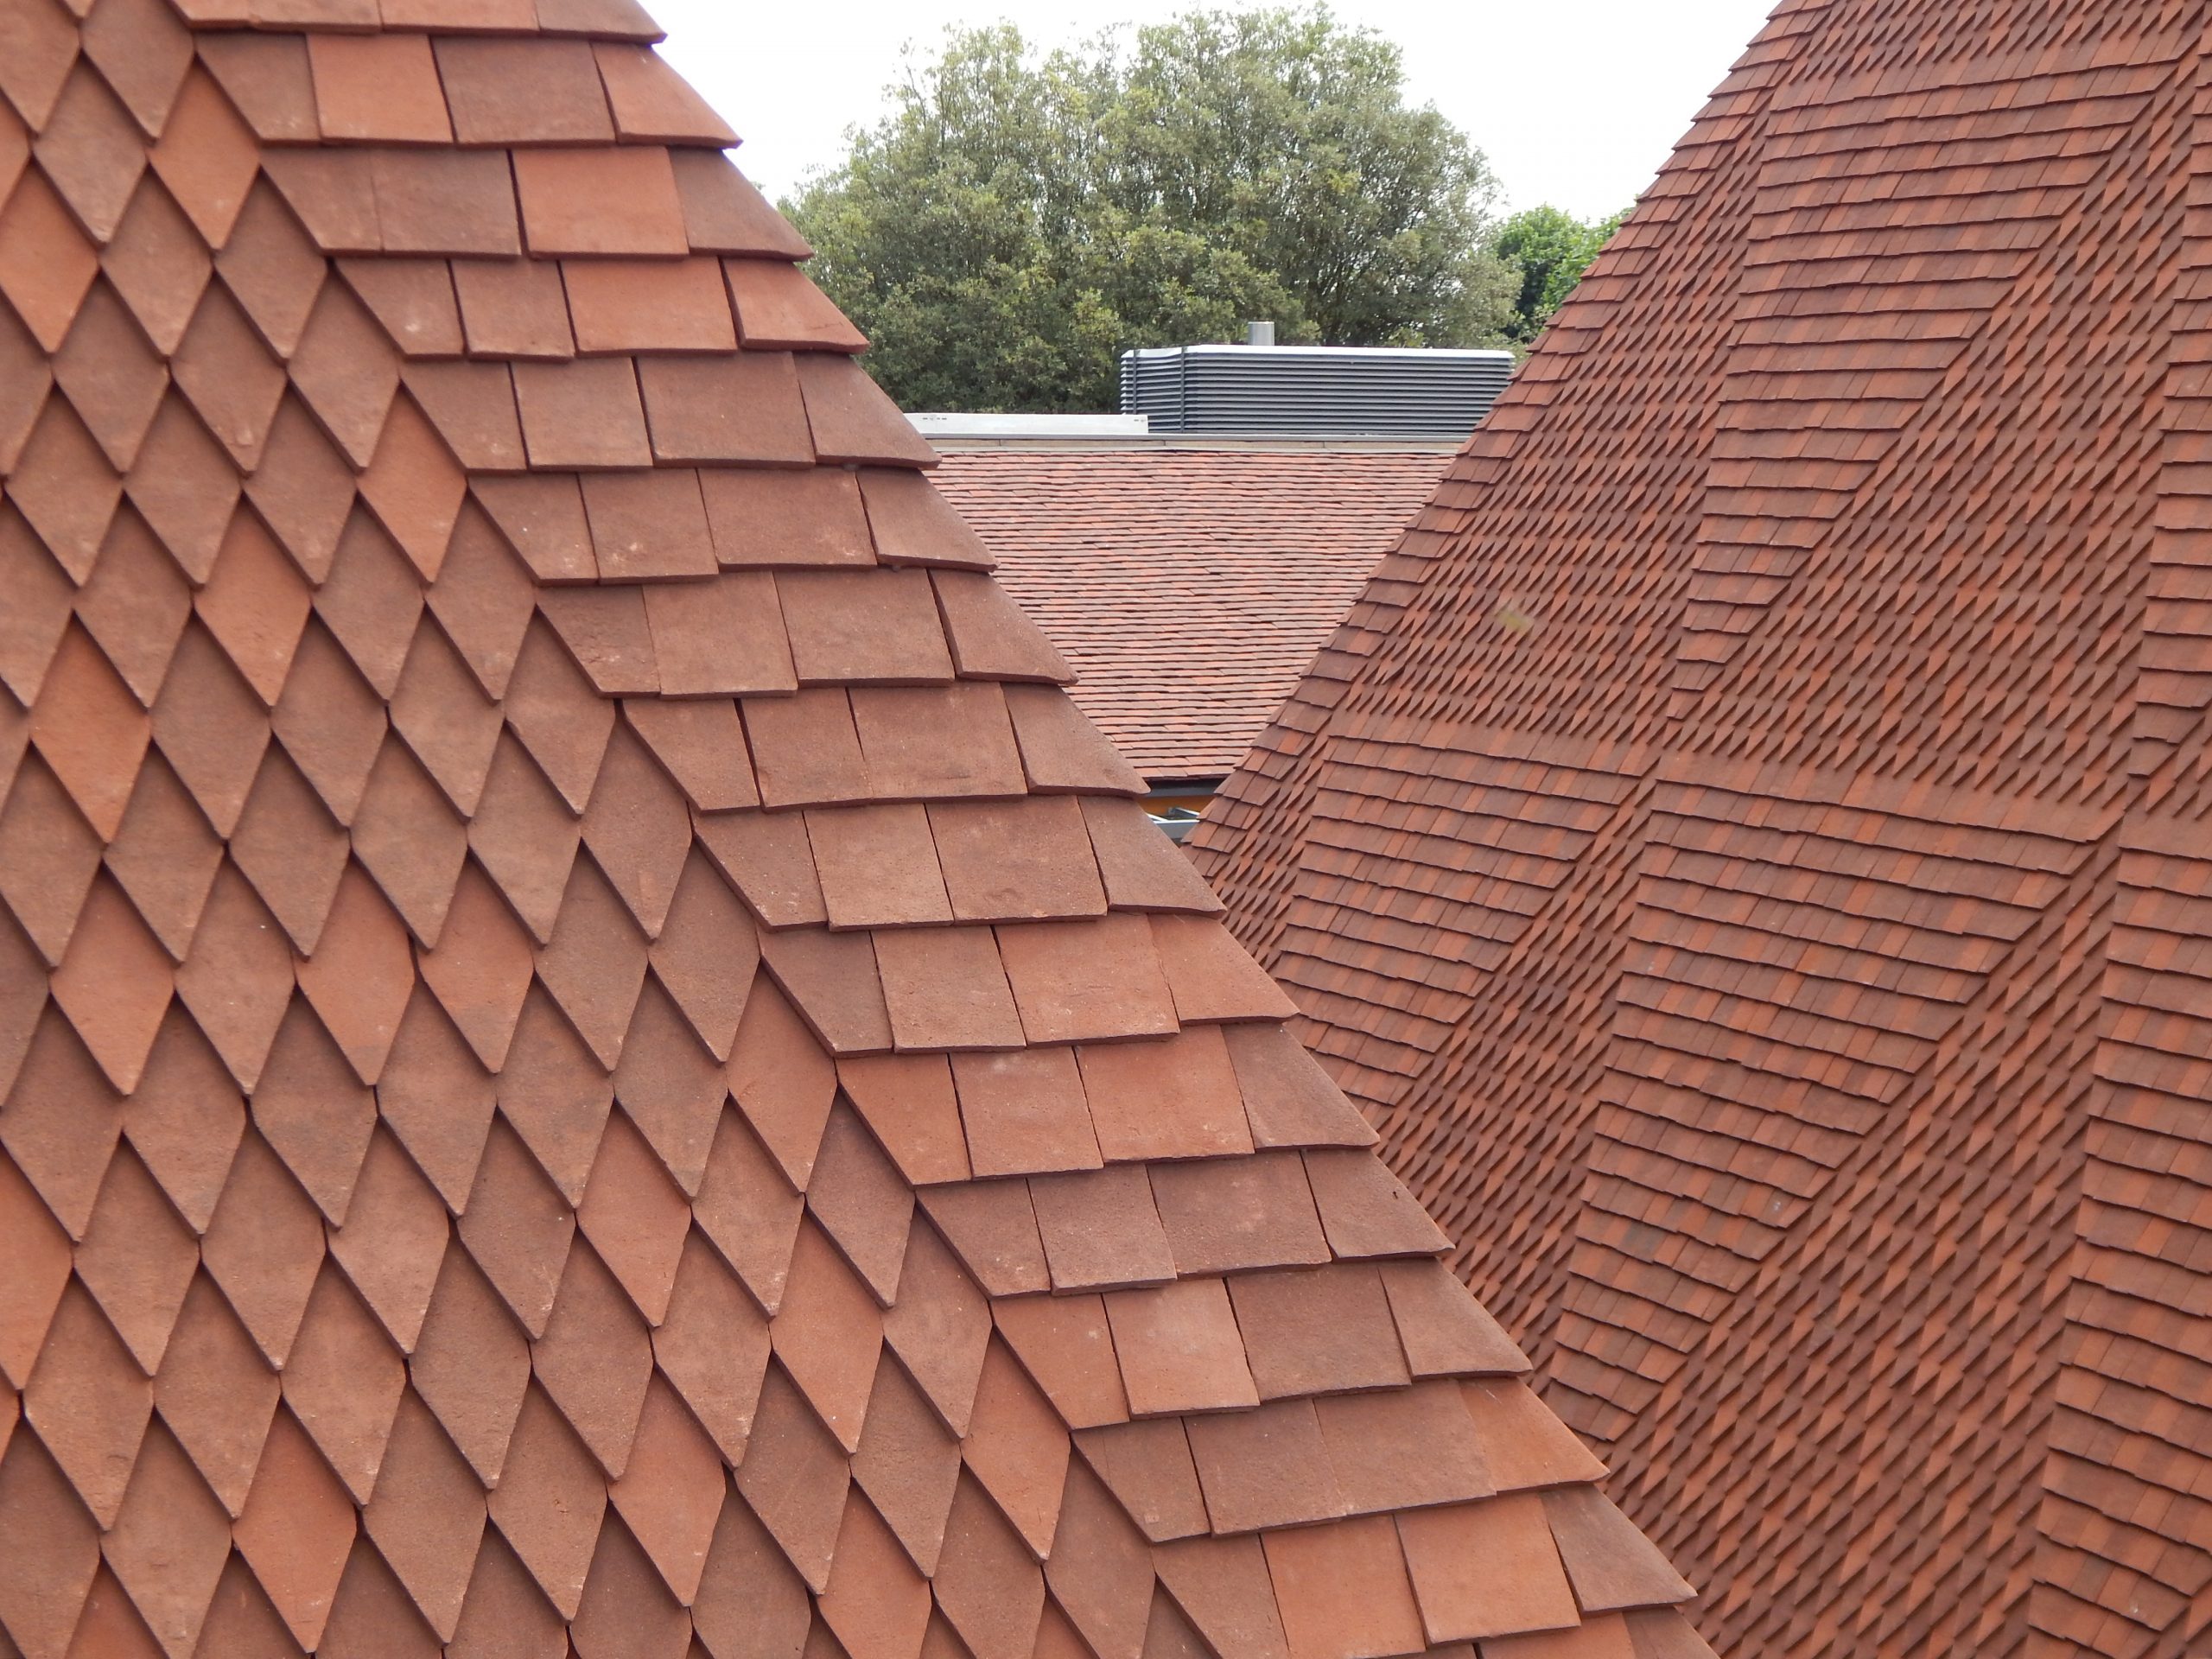 Tudor Roof Tile Co. for their Bespoke Handmade Clay Roof Tiles Build It Awards